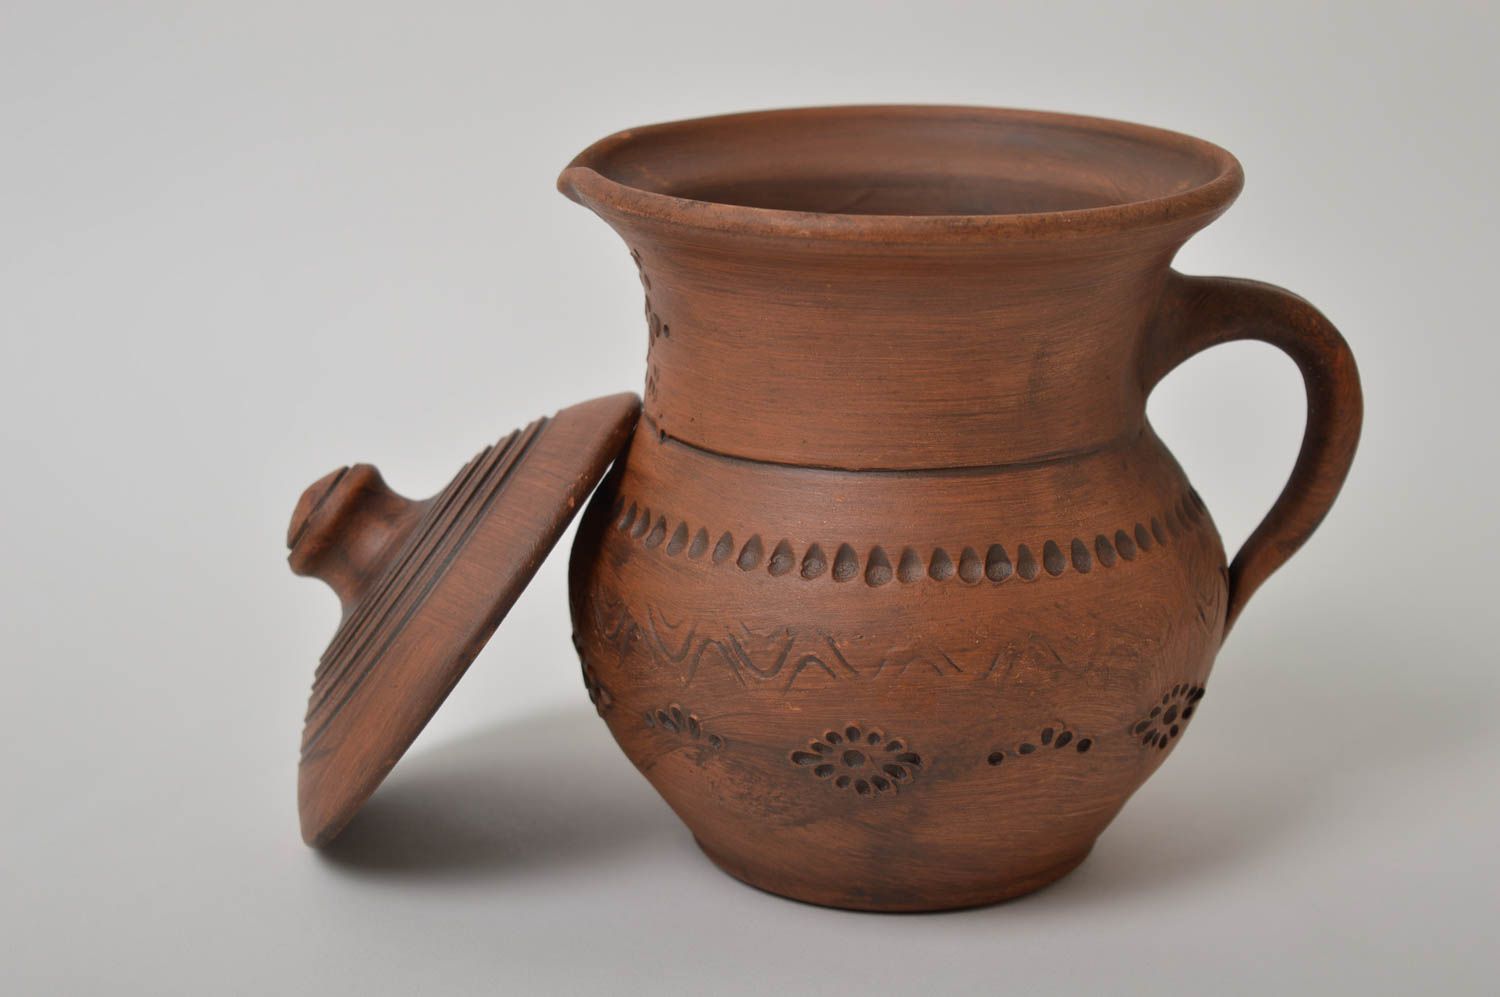 12 oz ceramic small handmade pitcher in village classic style 1 lb photo 4